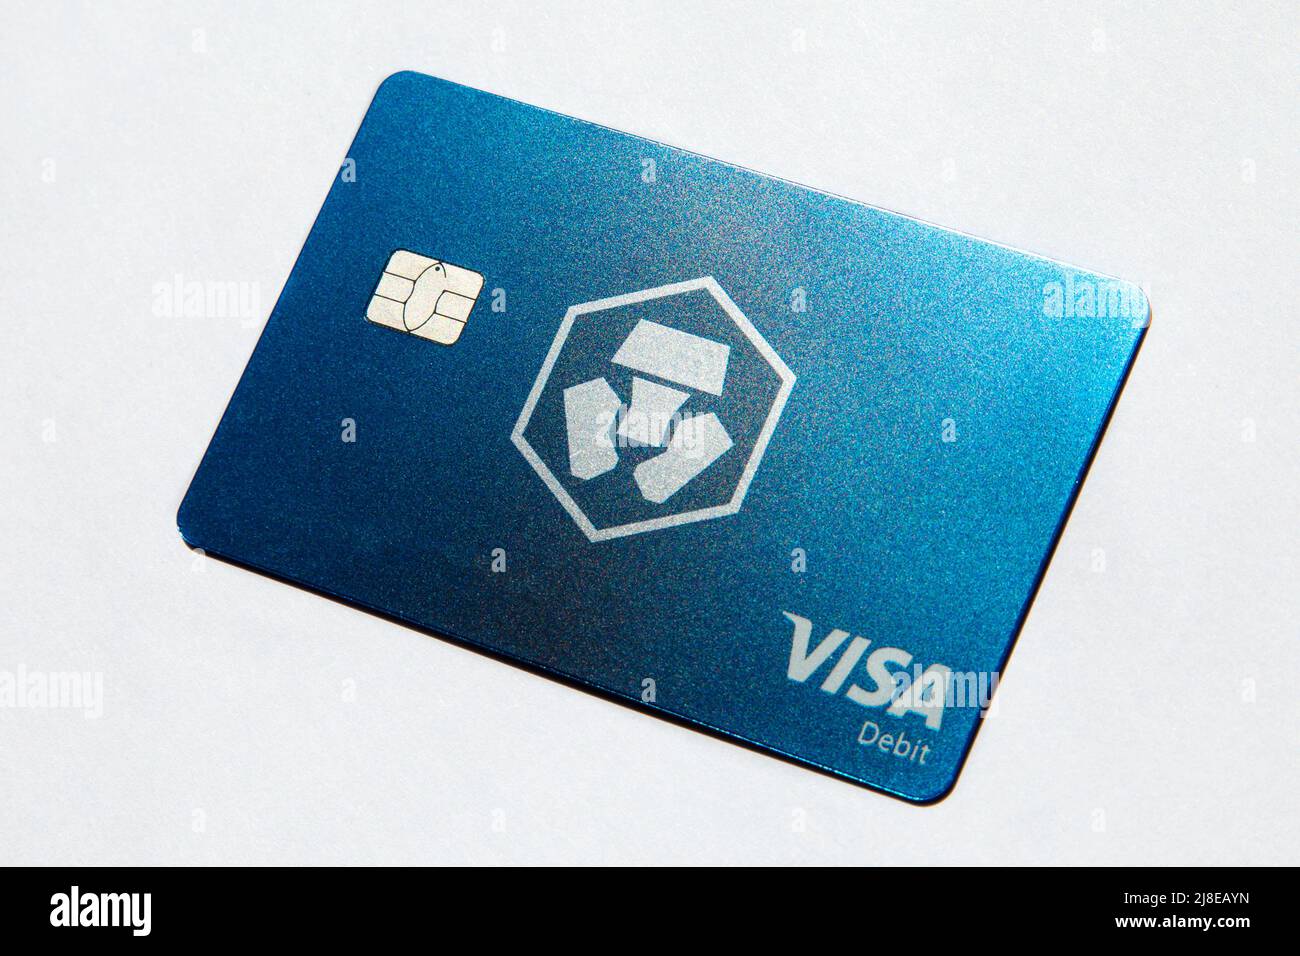 Studio still life of the Crypto.com Visa Debit Reward Card Stock Photo